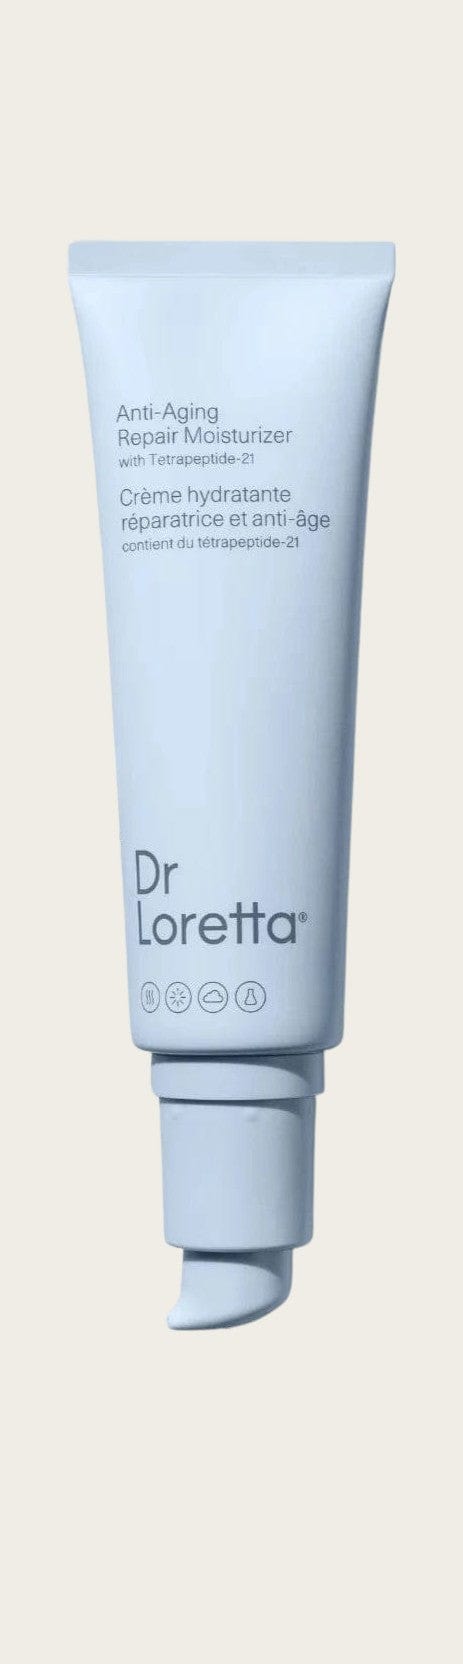 Dr Loretta Concentrated Firming Moisturizer, lotion, cream Anti-Aging Repair Moisturizer sunja link - canada